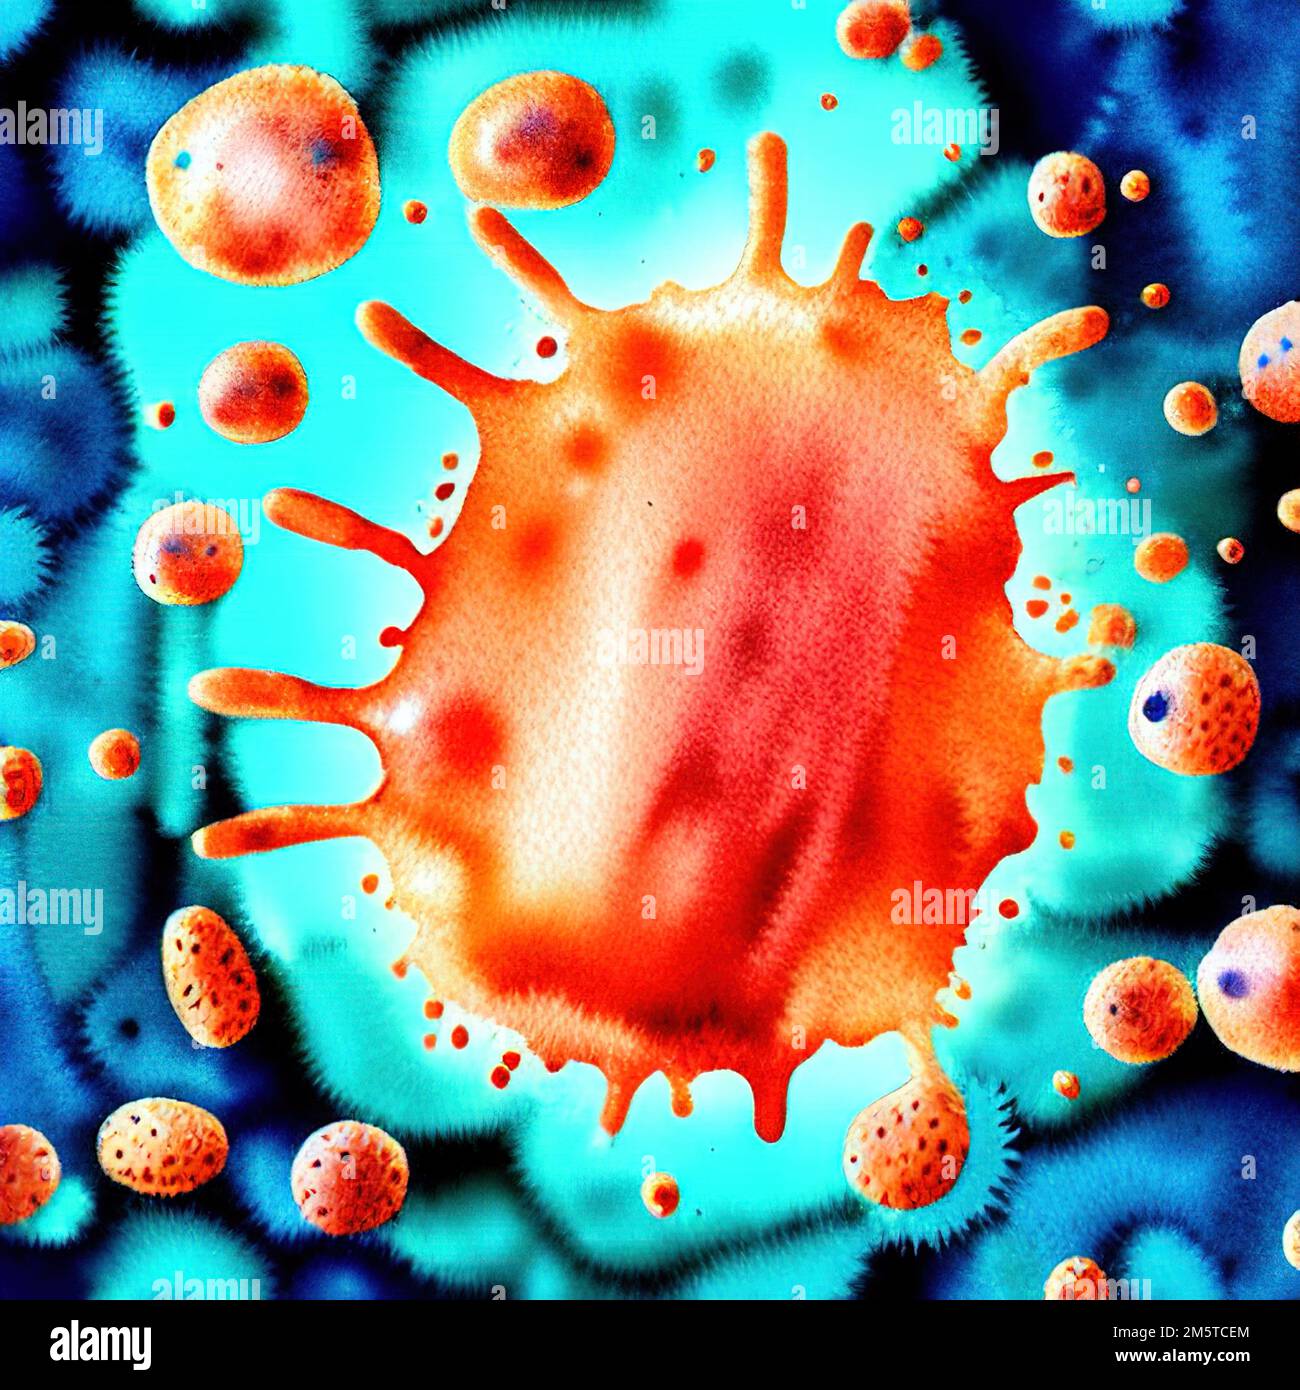 Abstrakte pathogene Viruszelle, Krebszelle unter dem Mikroskop, bösartiger Tumor, digitale Illustration Stockfoto